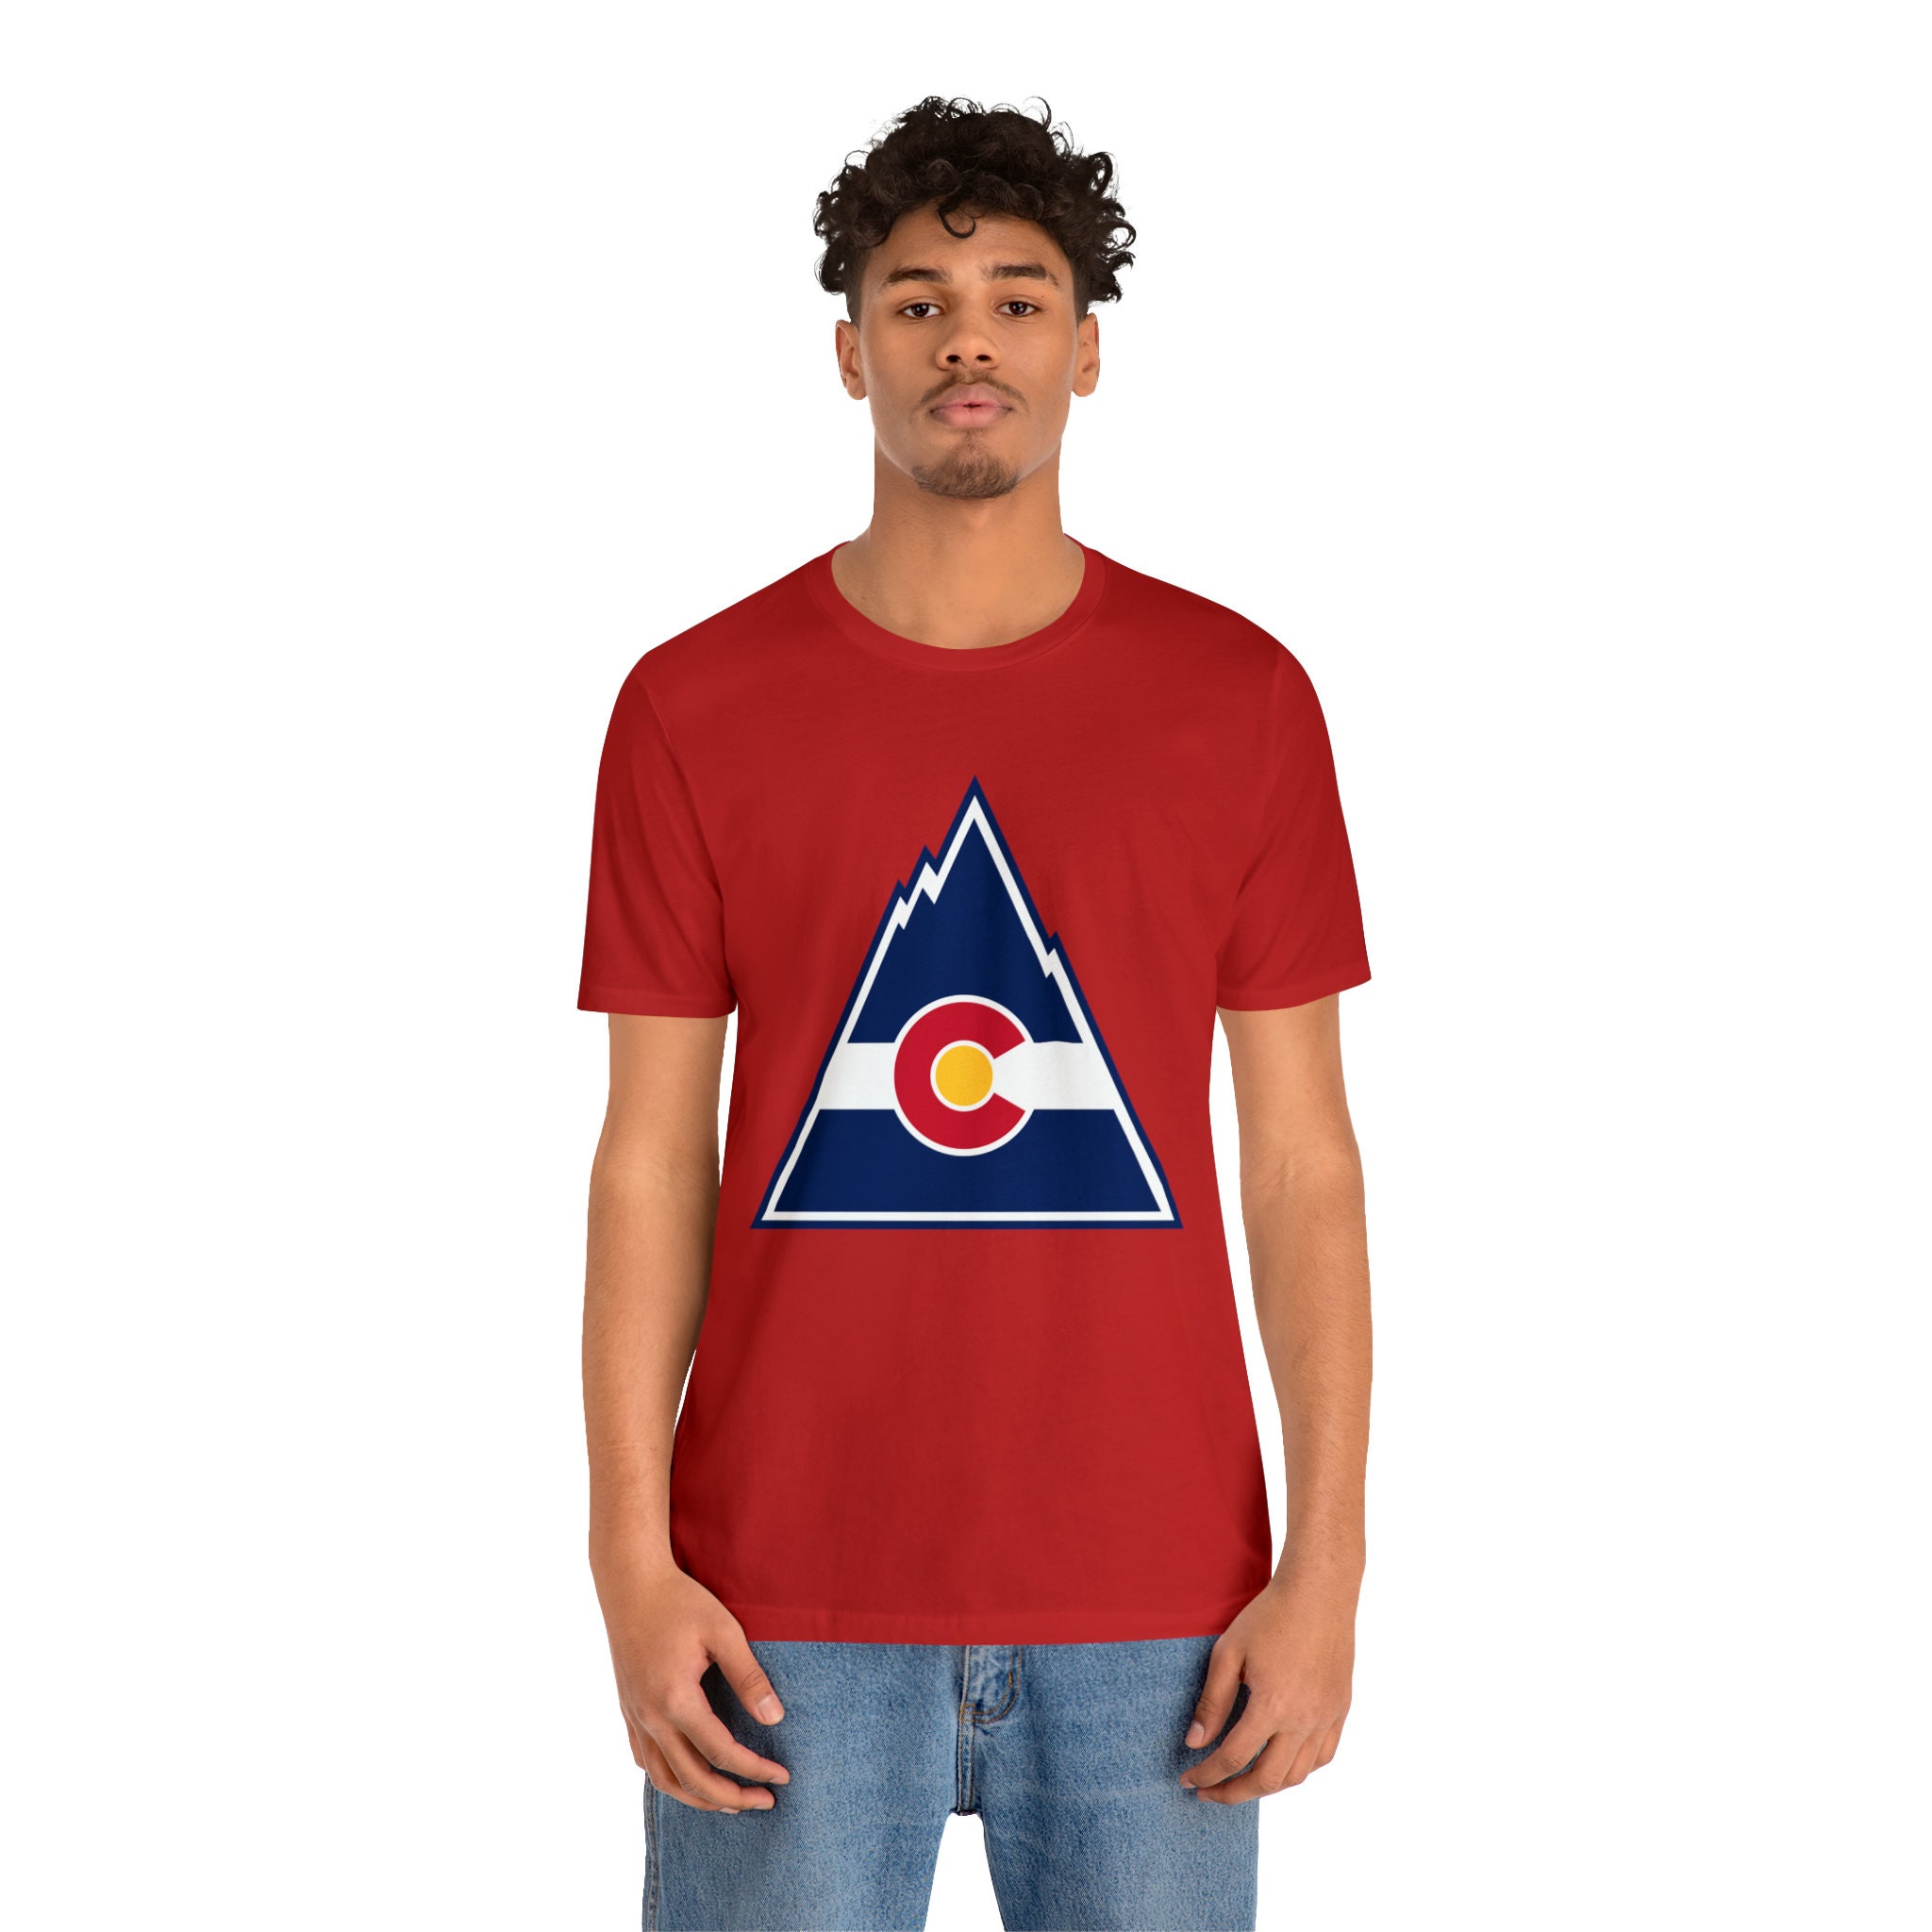 Buy Colorado Rockies Retro Hockey T-shirt Old Time Hockey NJ